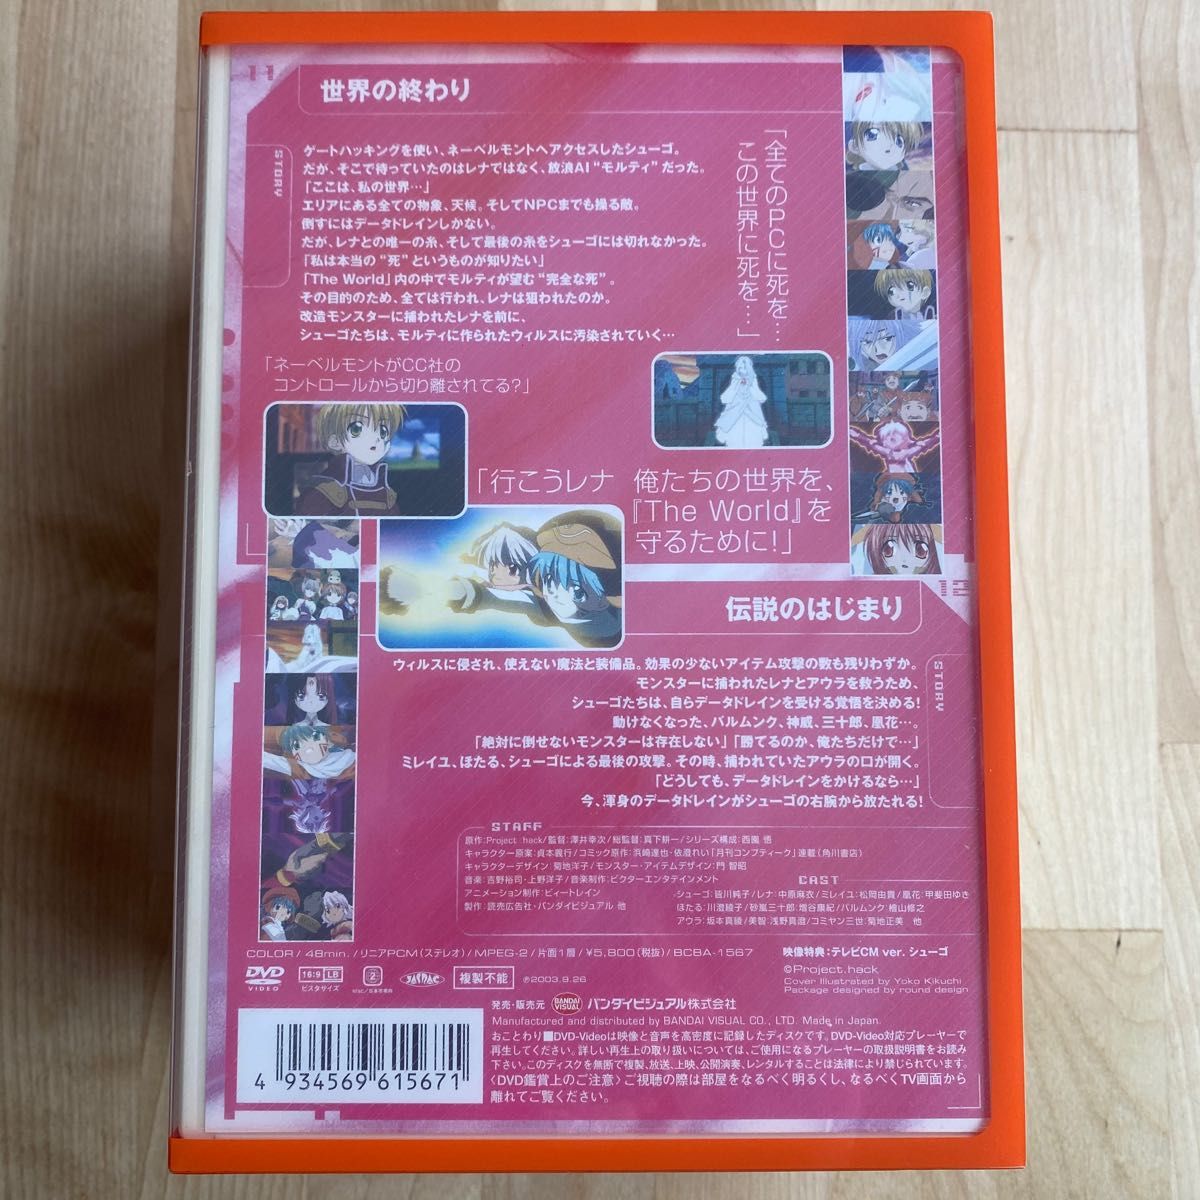 .hack 黄昏の腕輪伝説 全6巻 全巻セット DVD BOX